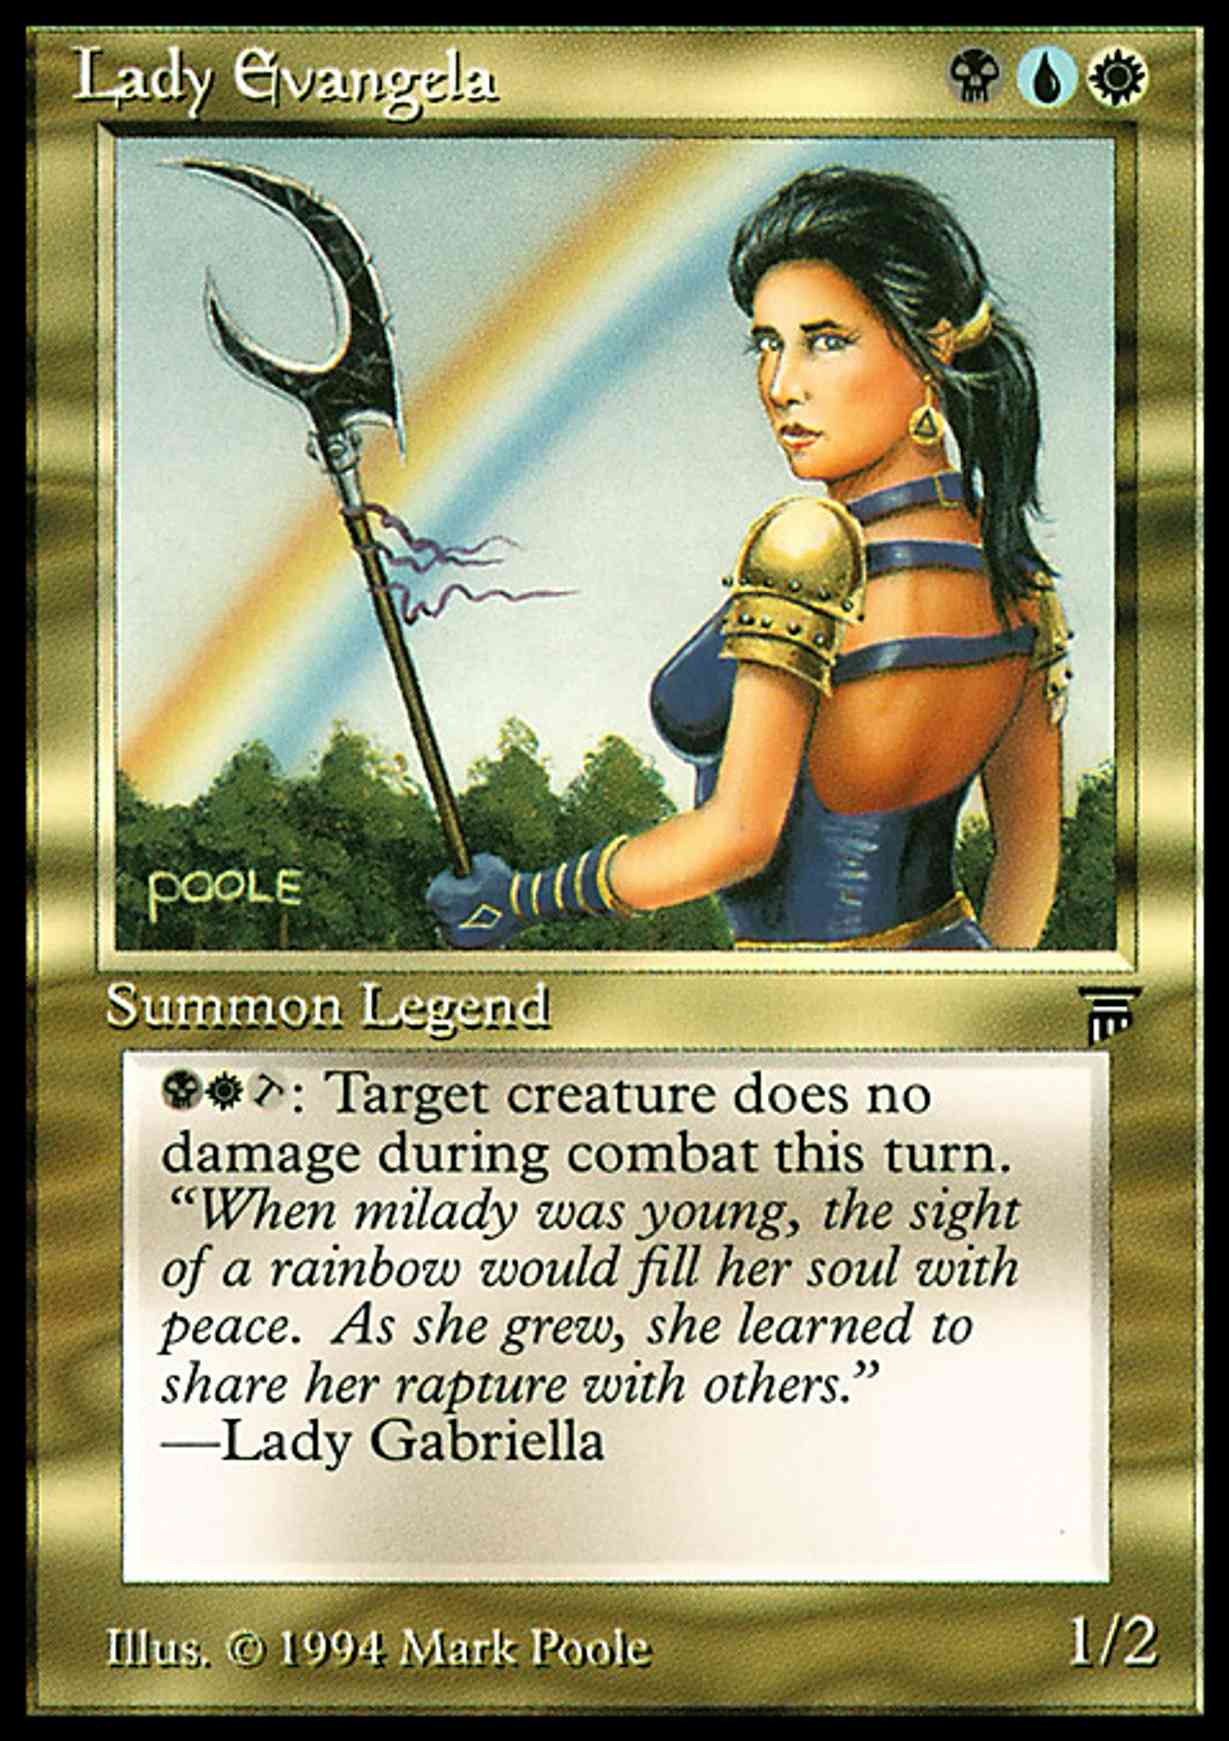 Lady Evangela magic card front